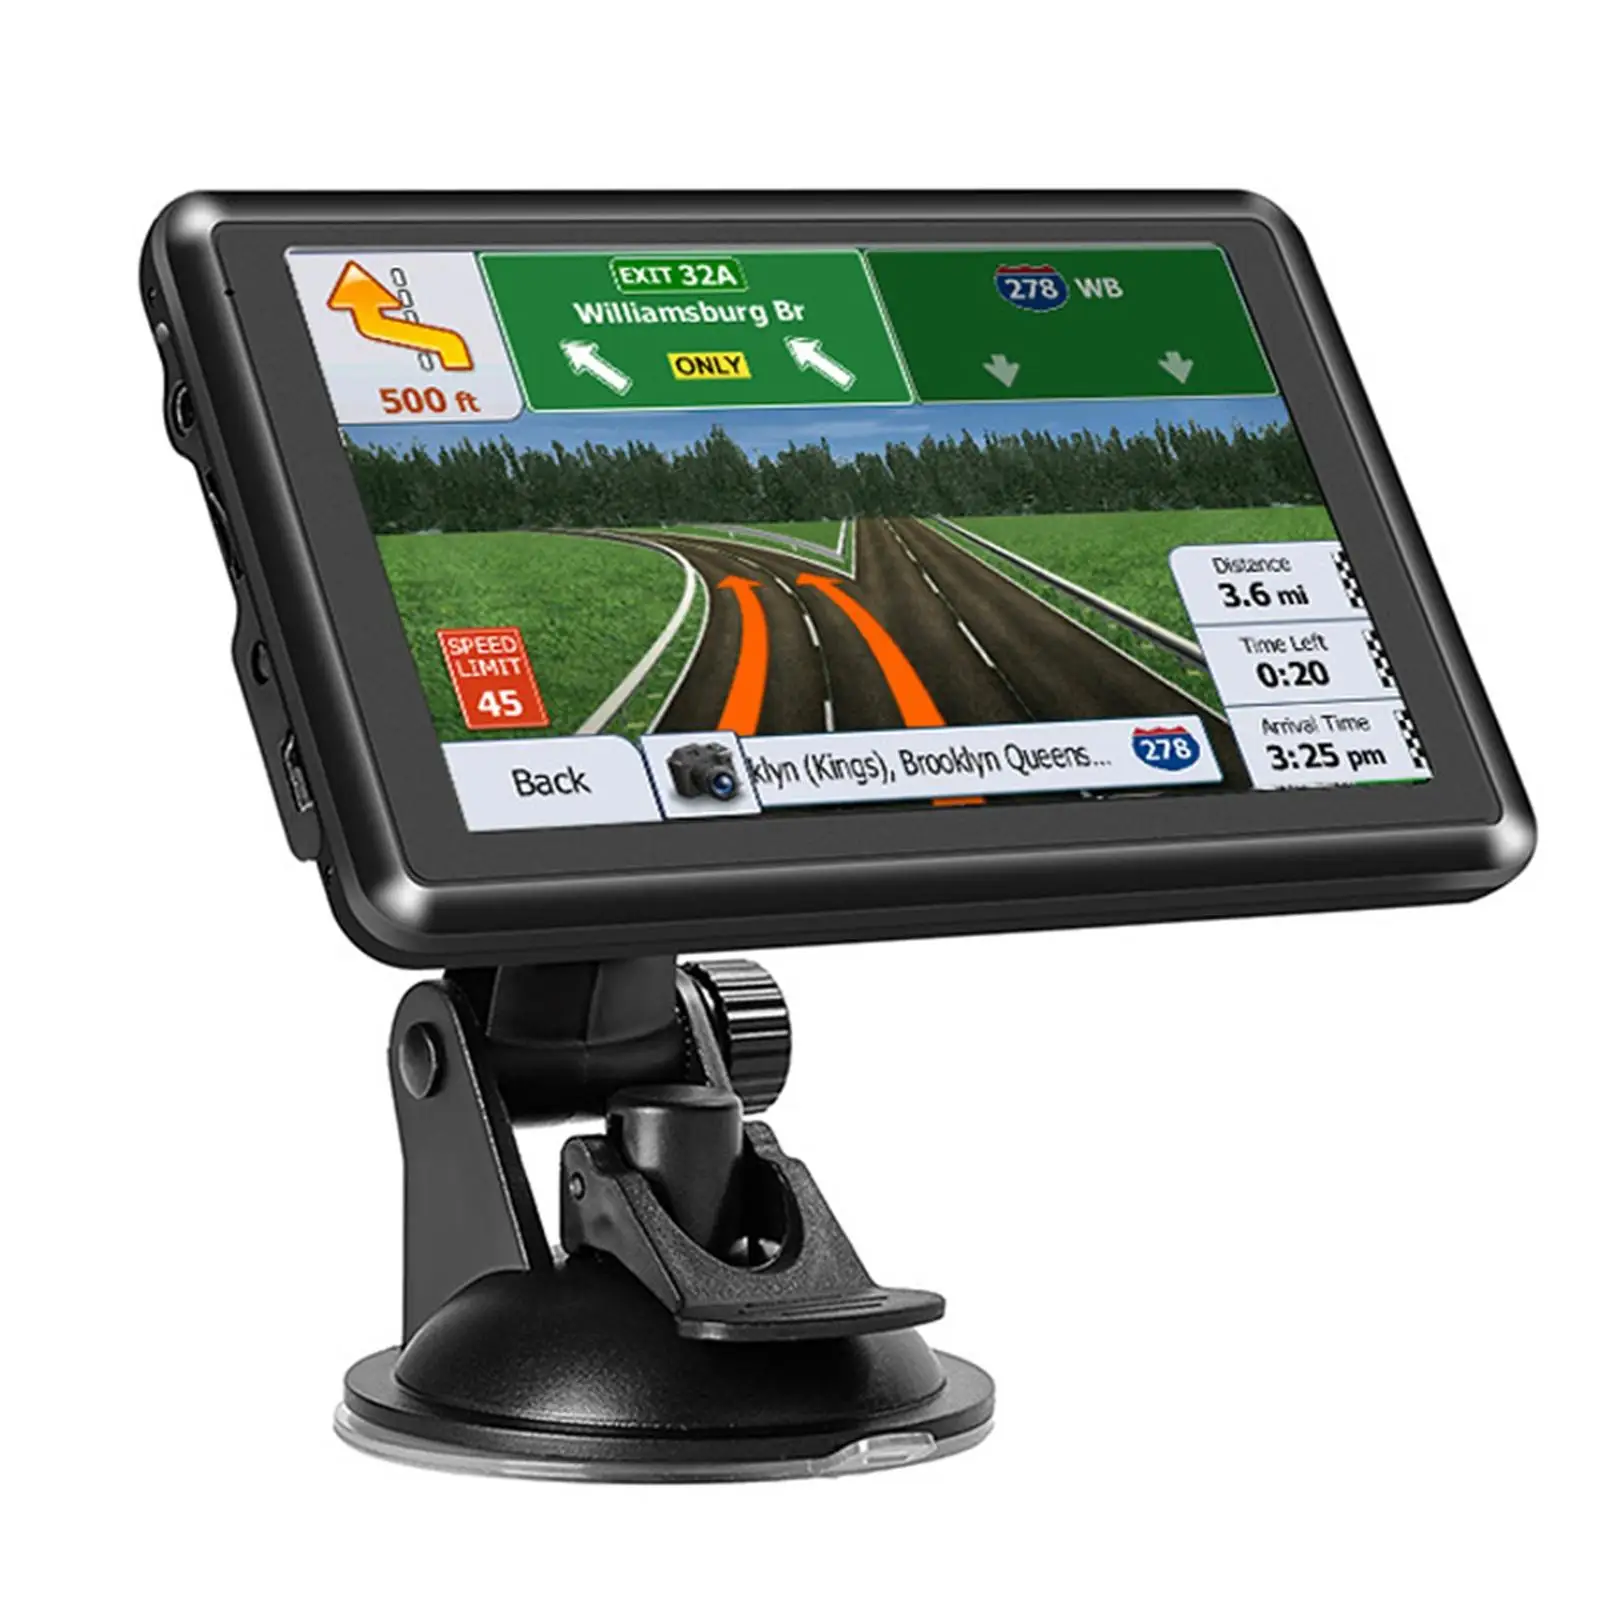 5 inch Touchscreen Car Truck GPS Navigation System GPS Navigator Device, 8G &128 MB Spoken Direction High Resolution Maps